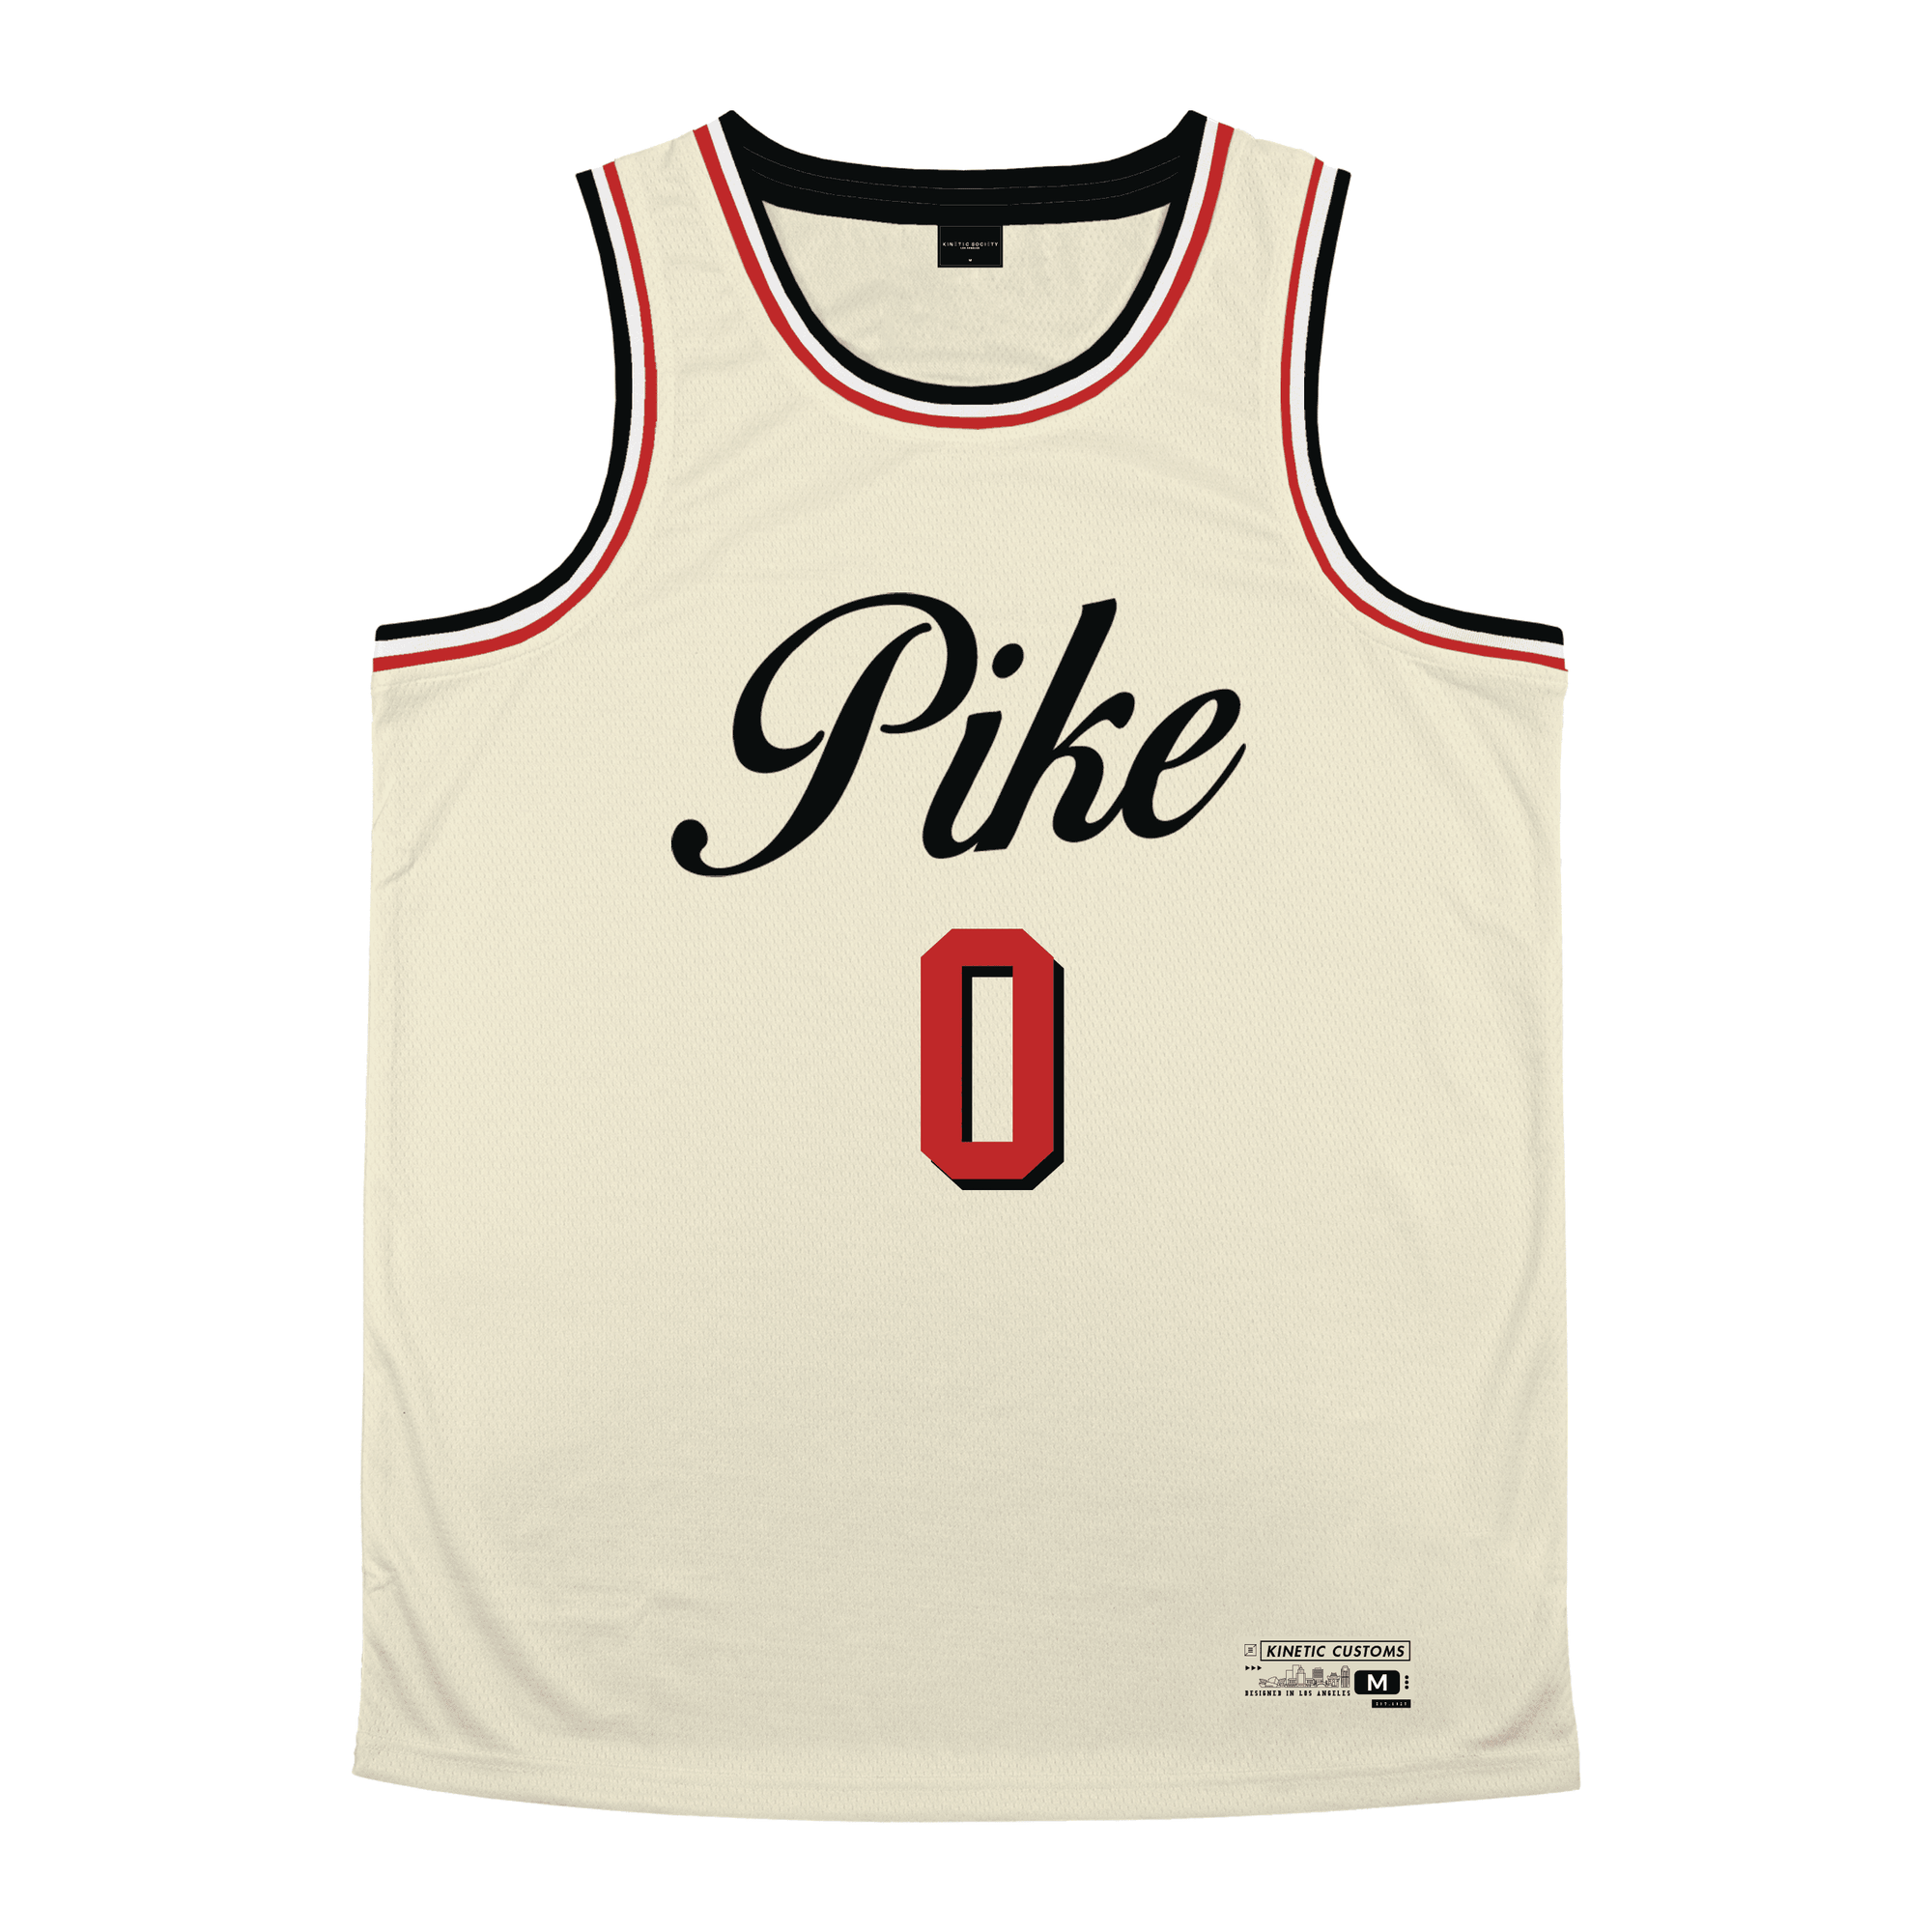 Pi Kappa Alpha - VIntage Cream Basketball Jersey